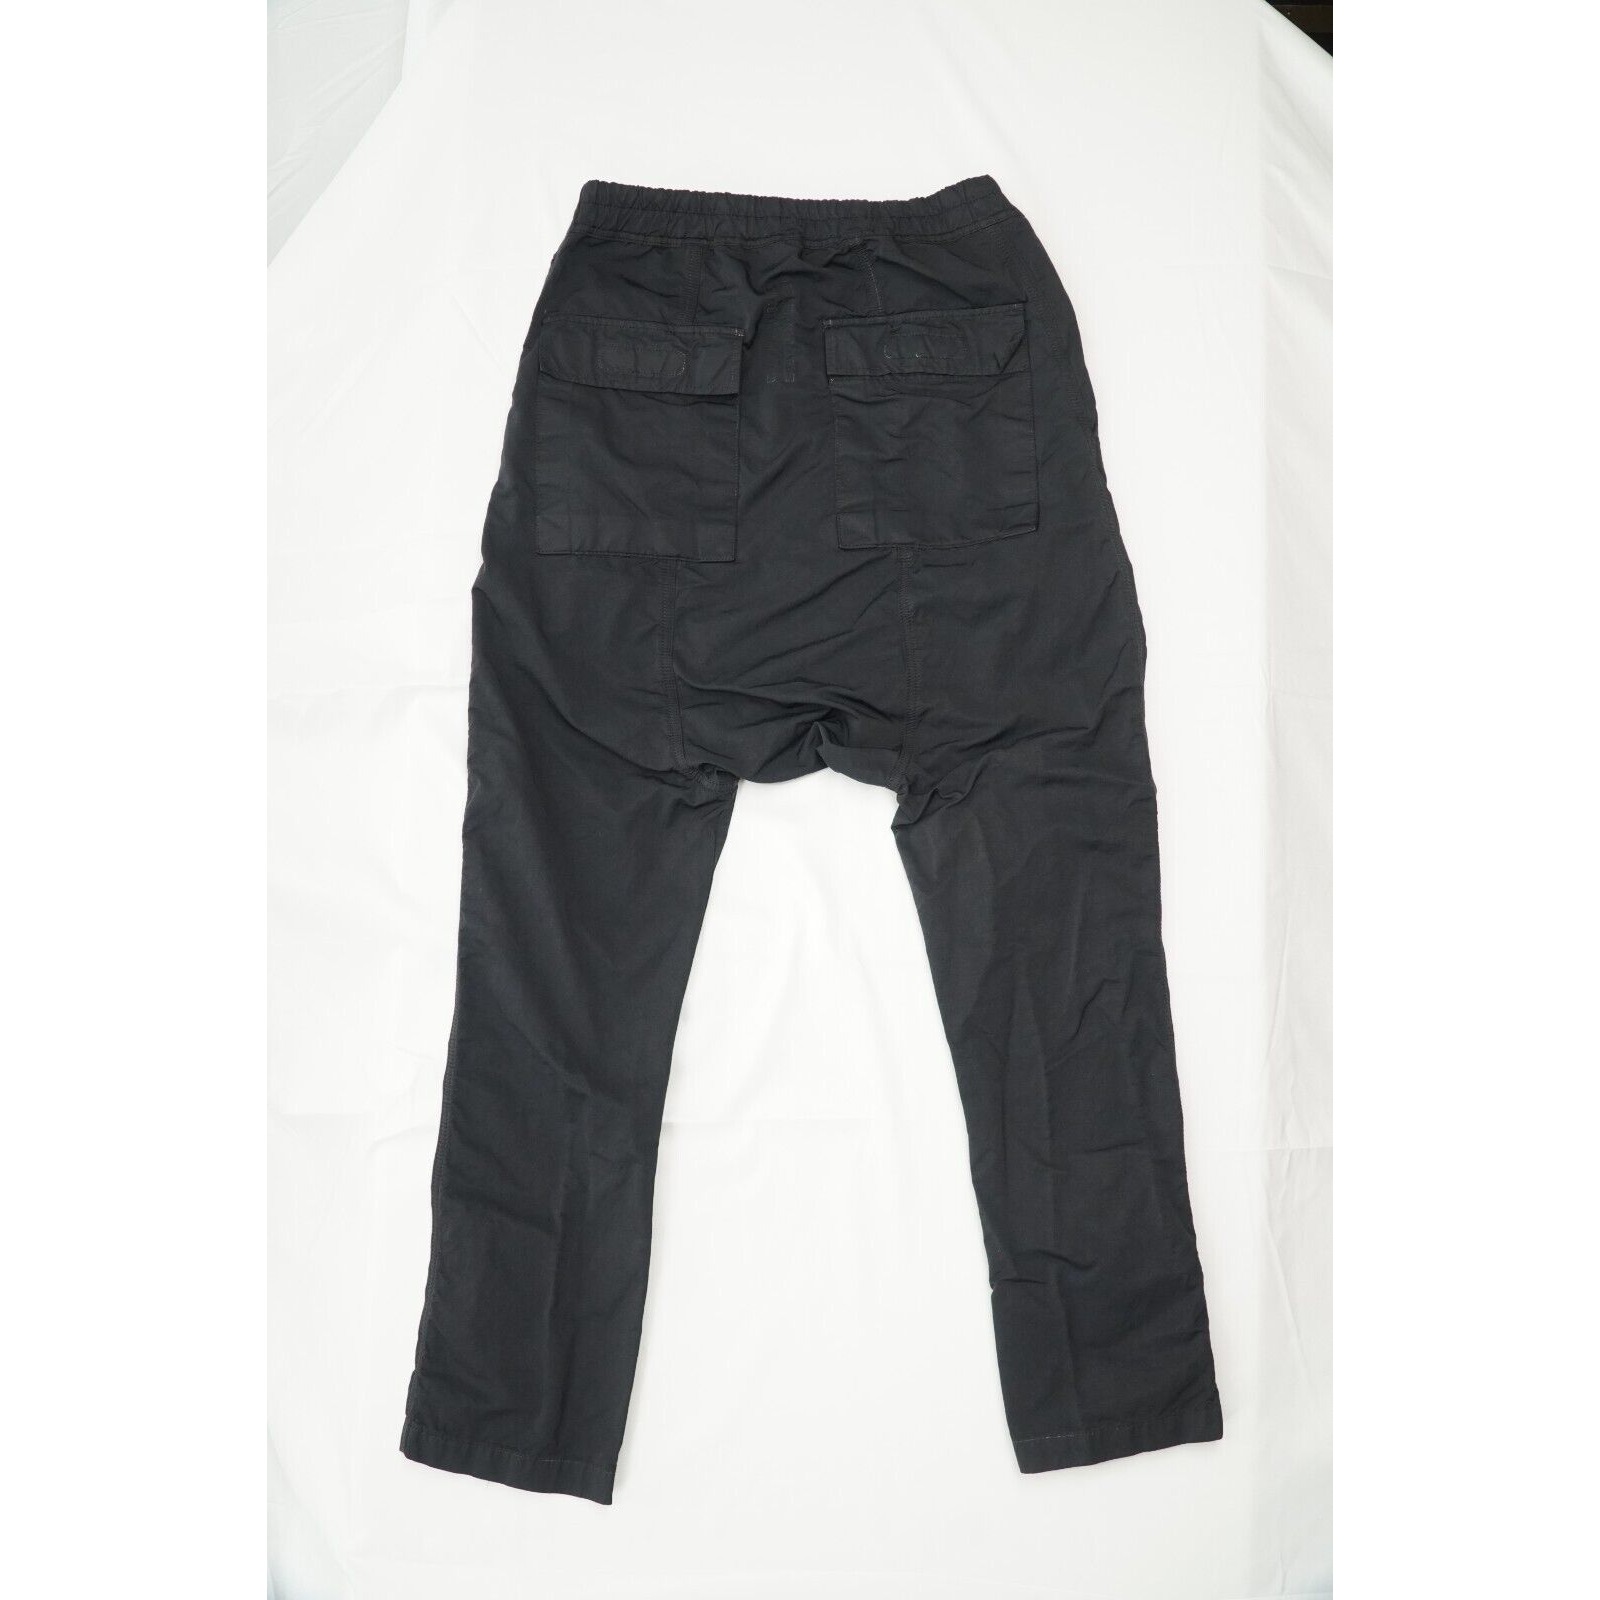 Black Lounge Pants Elastic Drawstring Drop Crotch Large - 6